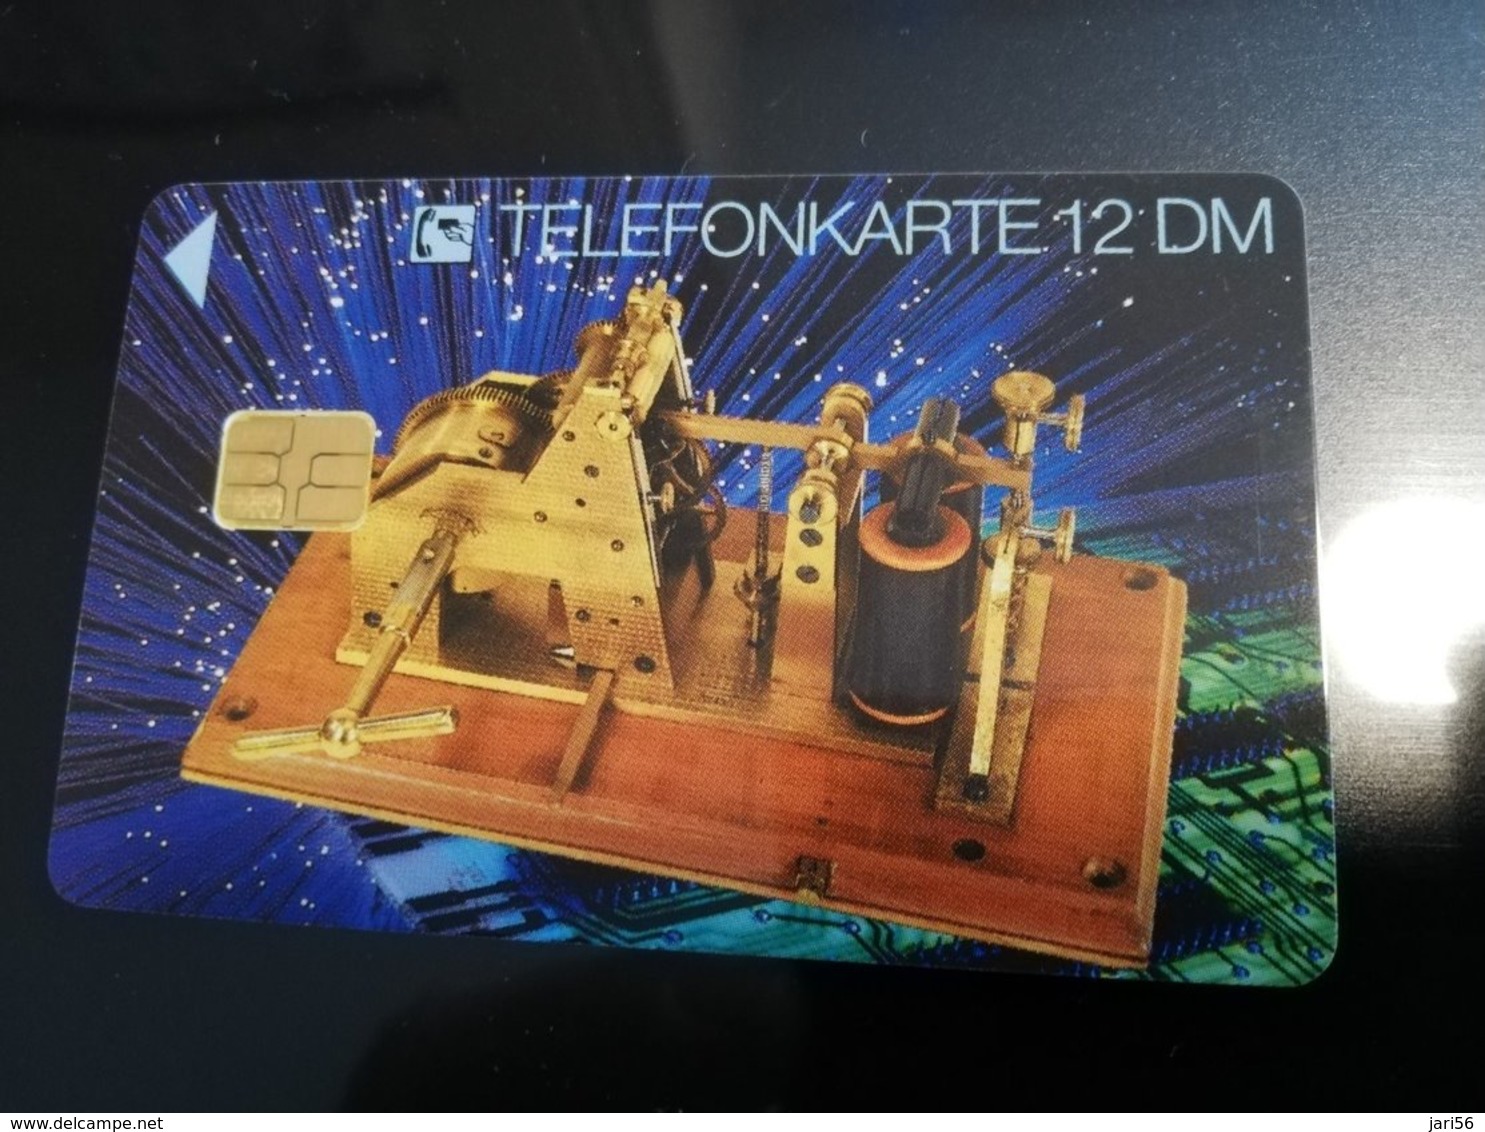 DUITSLAND/ GERMANY  CHIPCARDS E001 -E016  16x 12DM mint COMPLETE SET  **002**